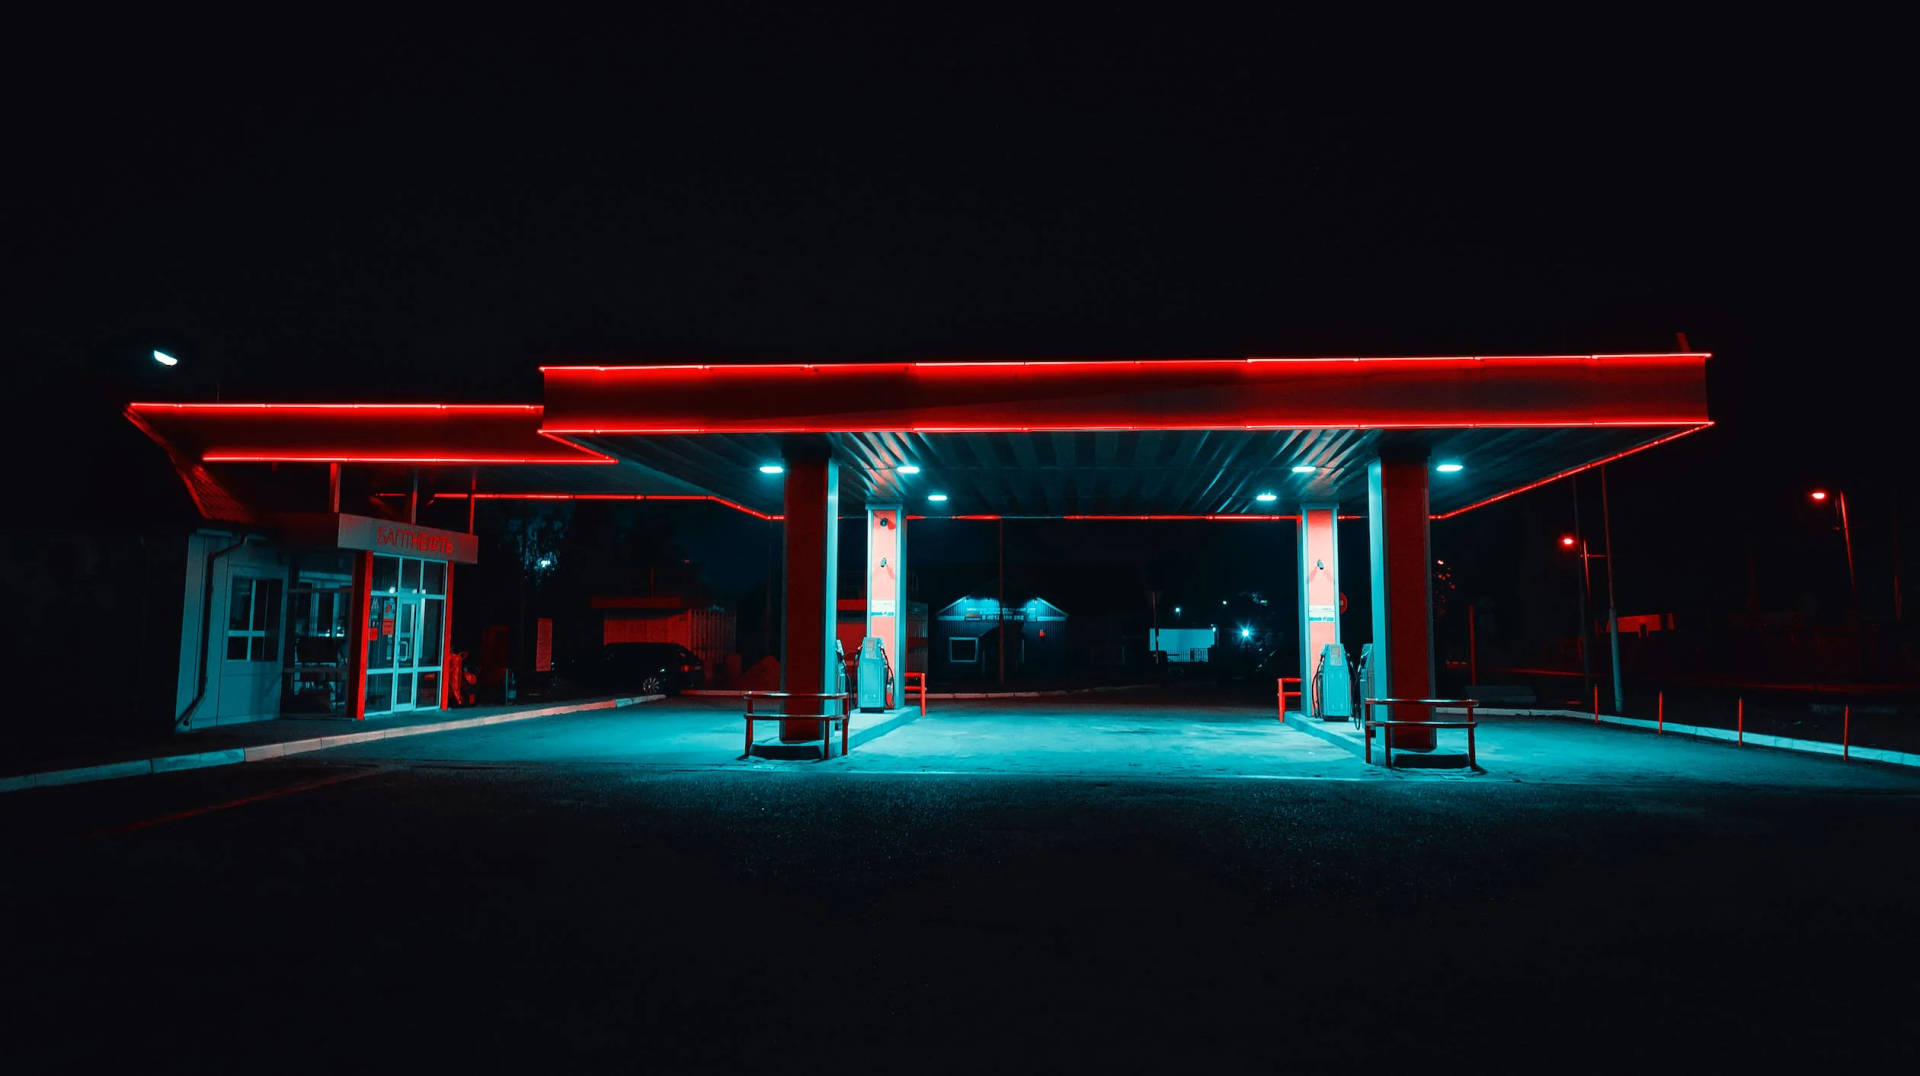 Gasoline Station Night City Background